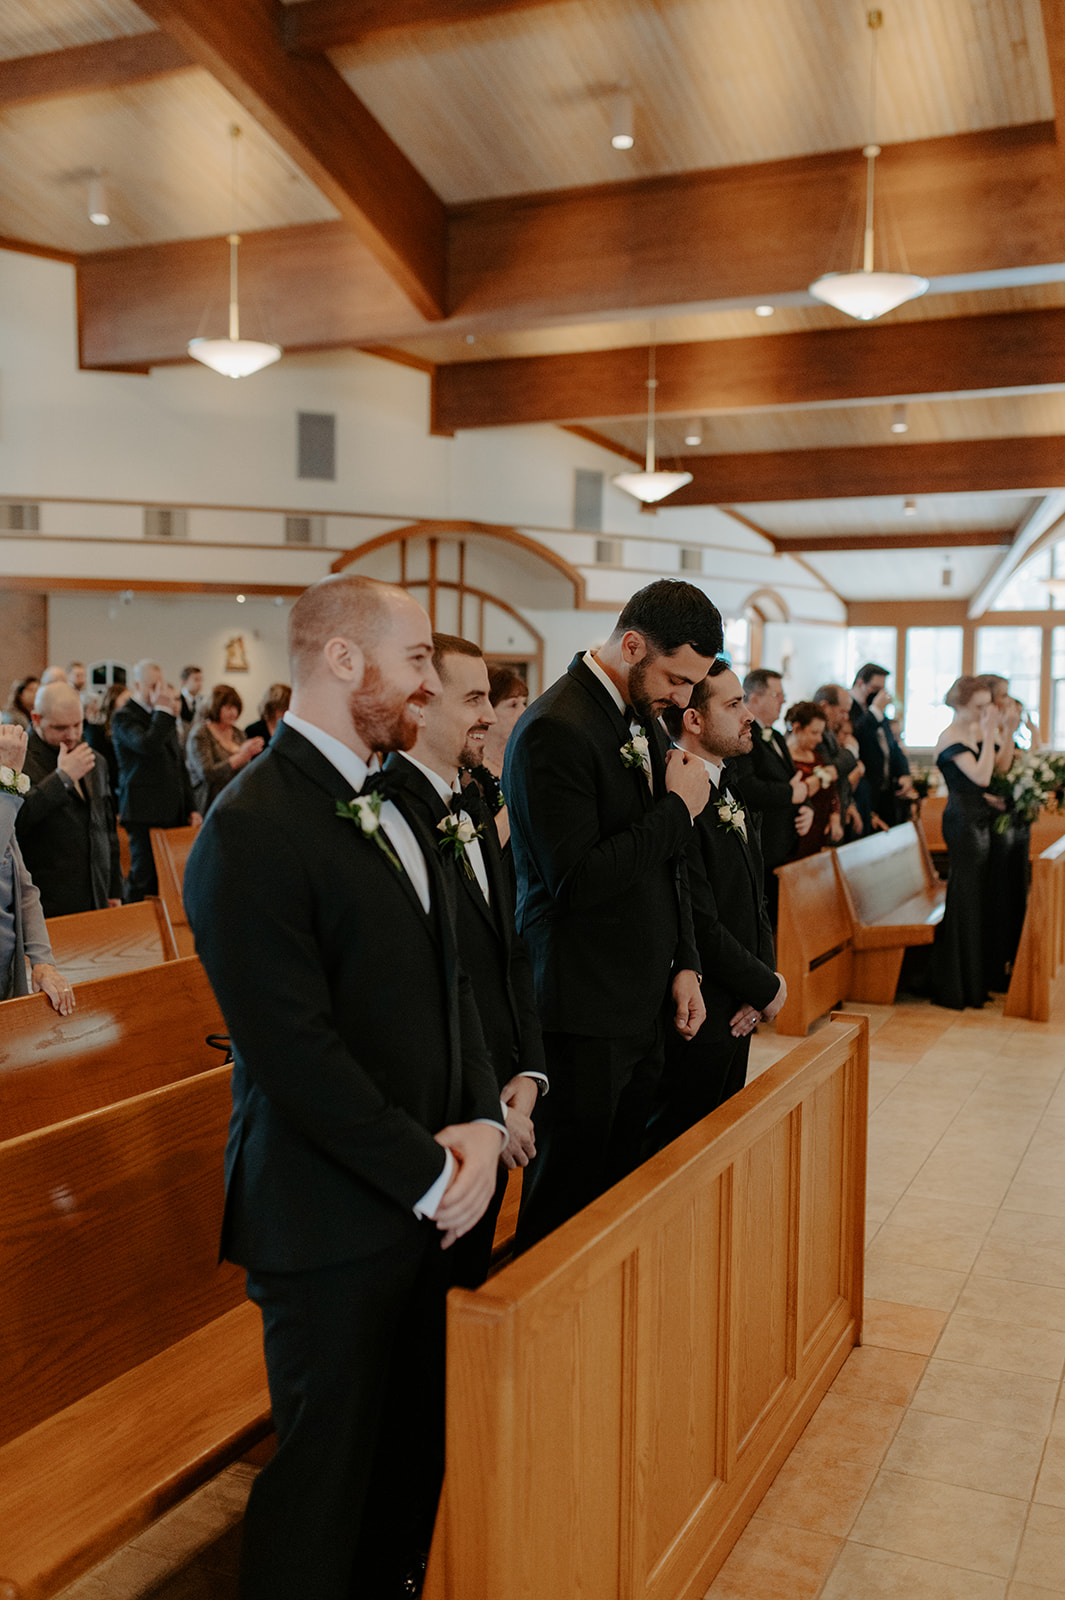 traditional church wedding photos